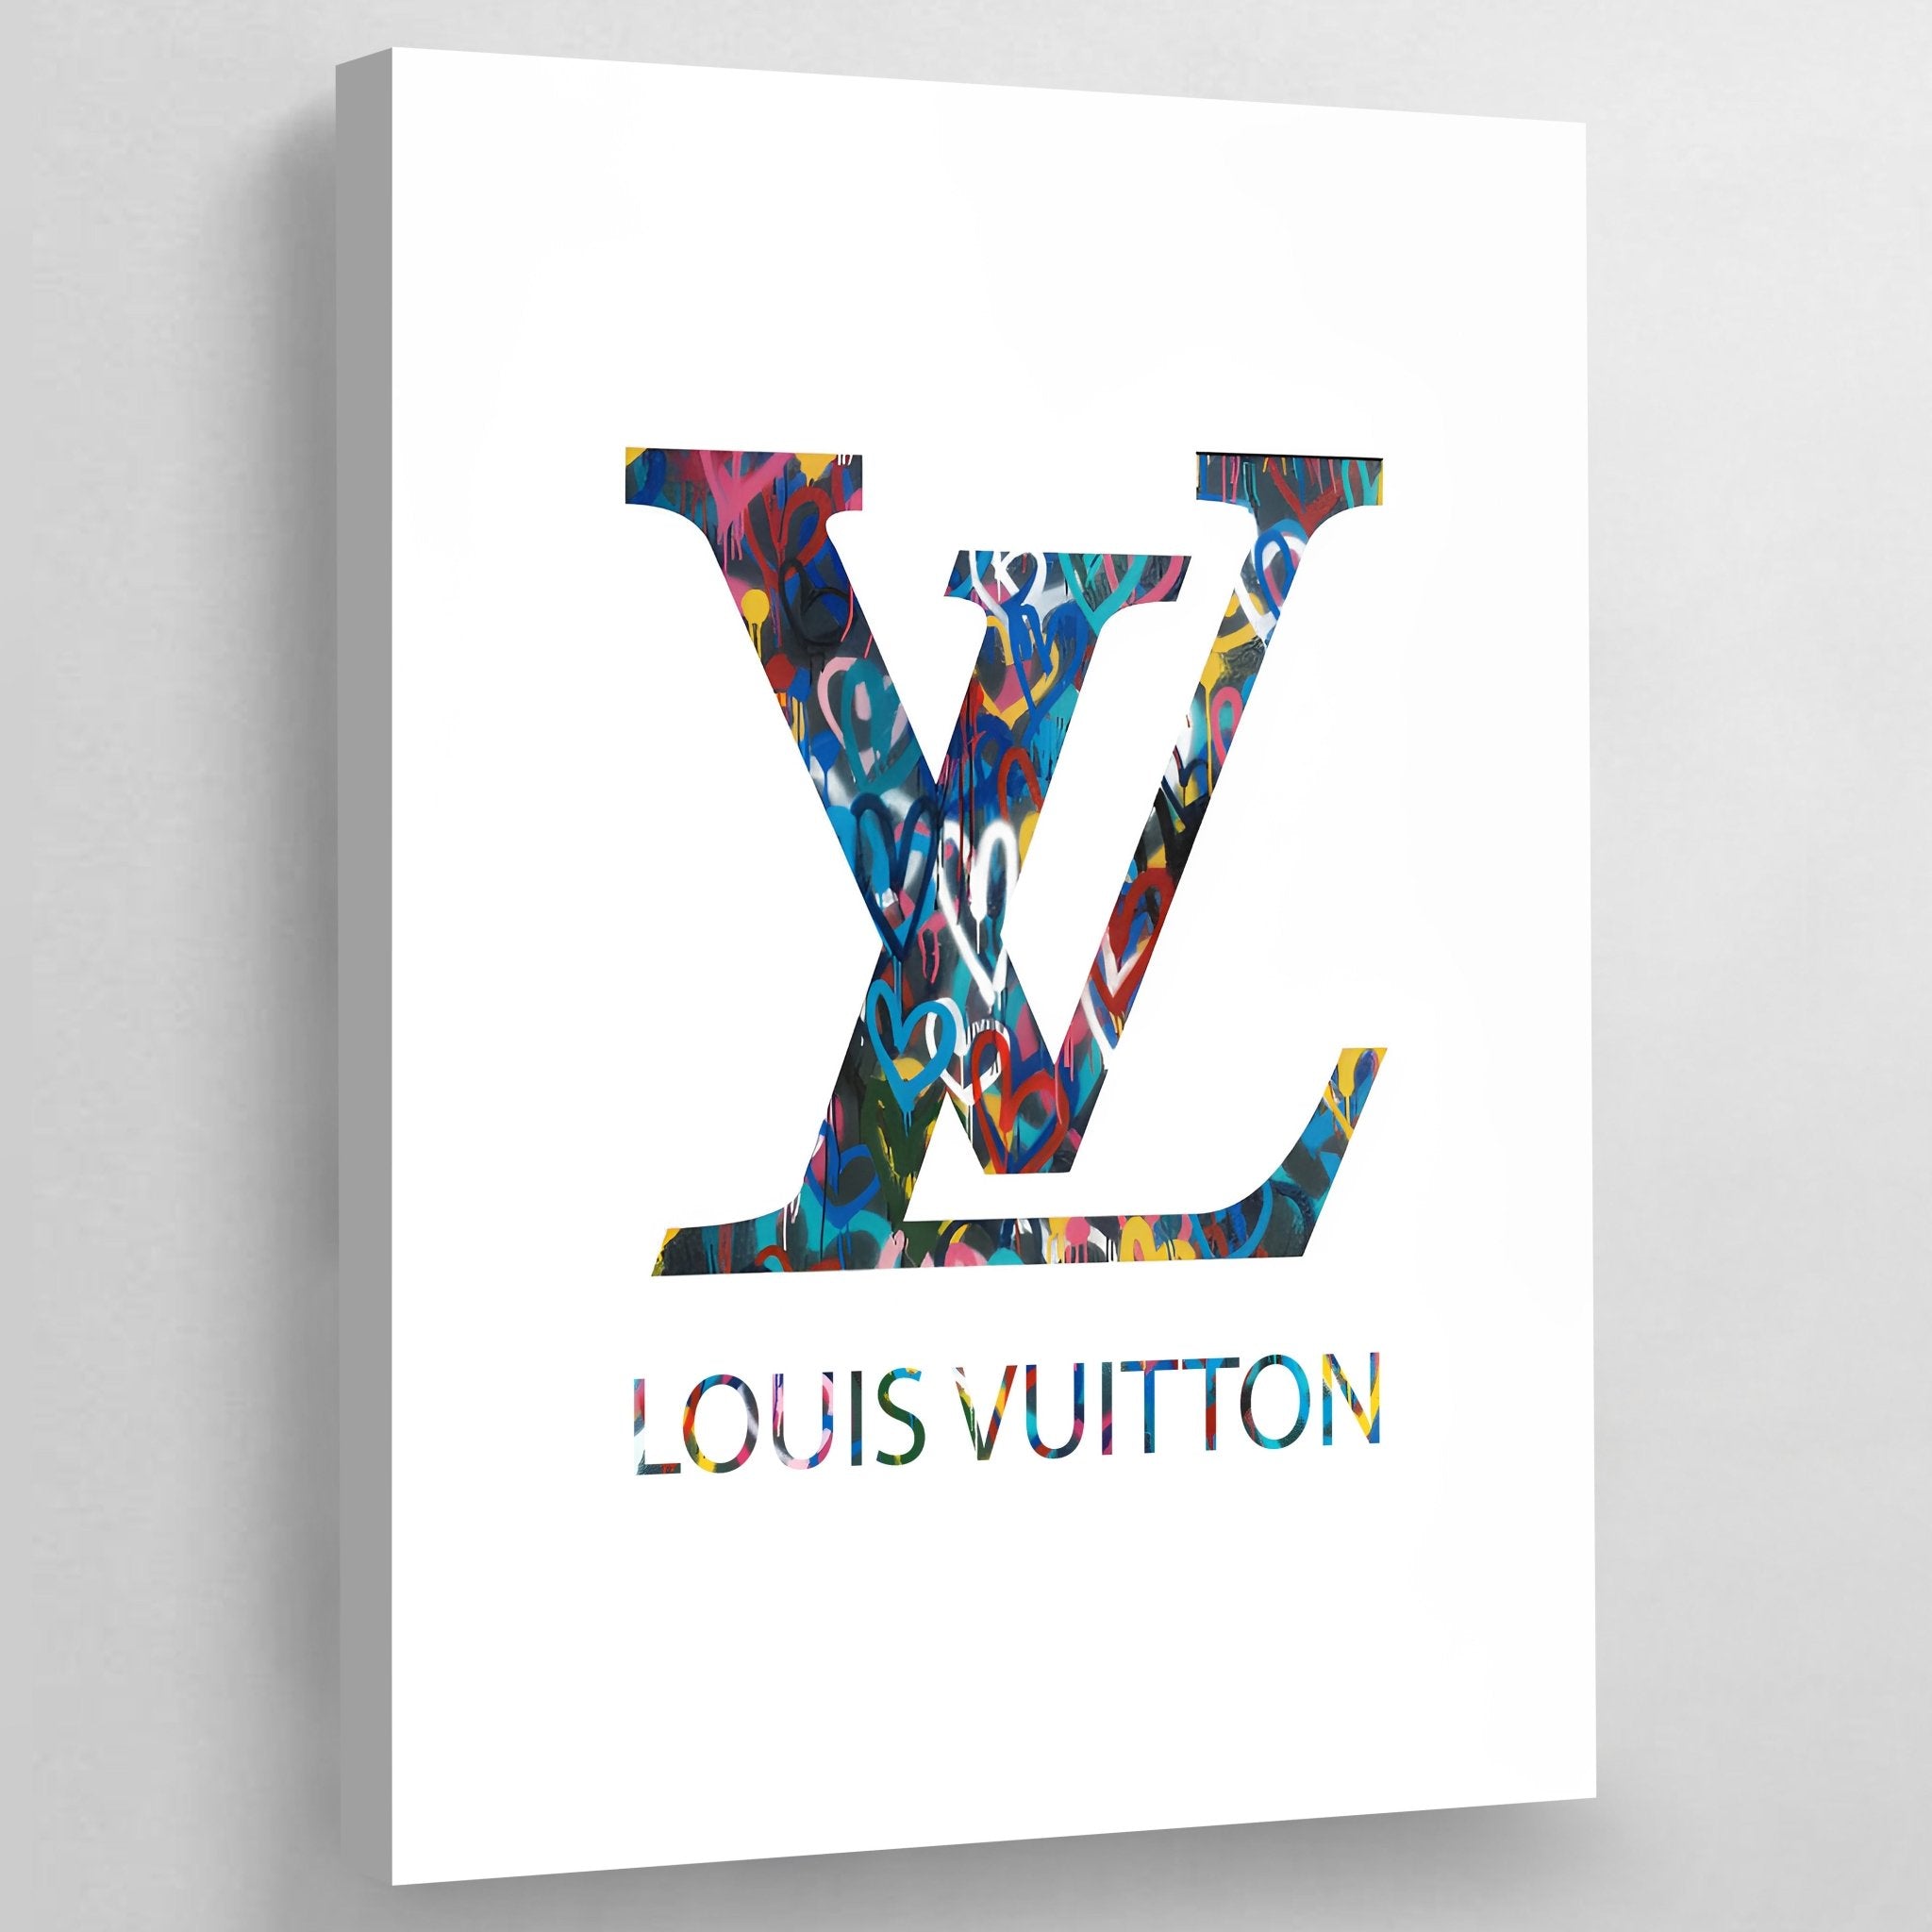 New Louis Vuitton x Yayoi Kusama Lacks Attention to the Zeitgeist